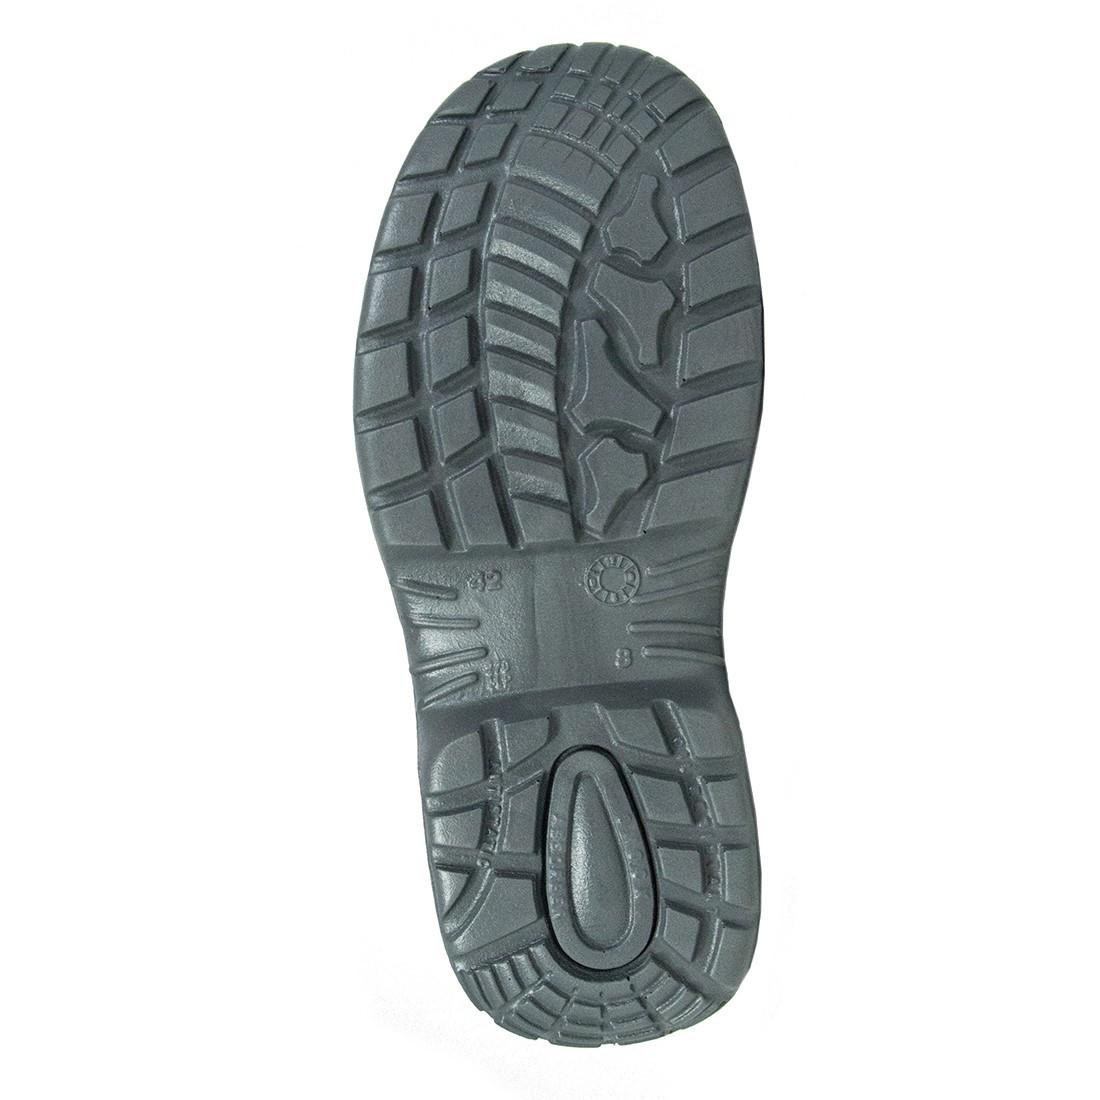 Pantofi Tribeca S1 SRC - Incaltaminte de protectie | Bocanci, Pantofi, Sandale, Cizme